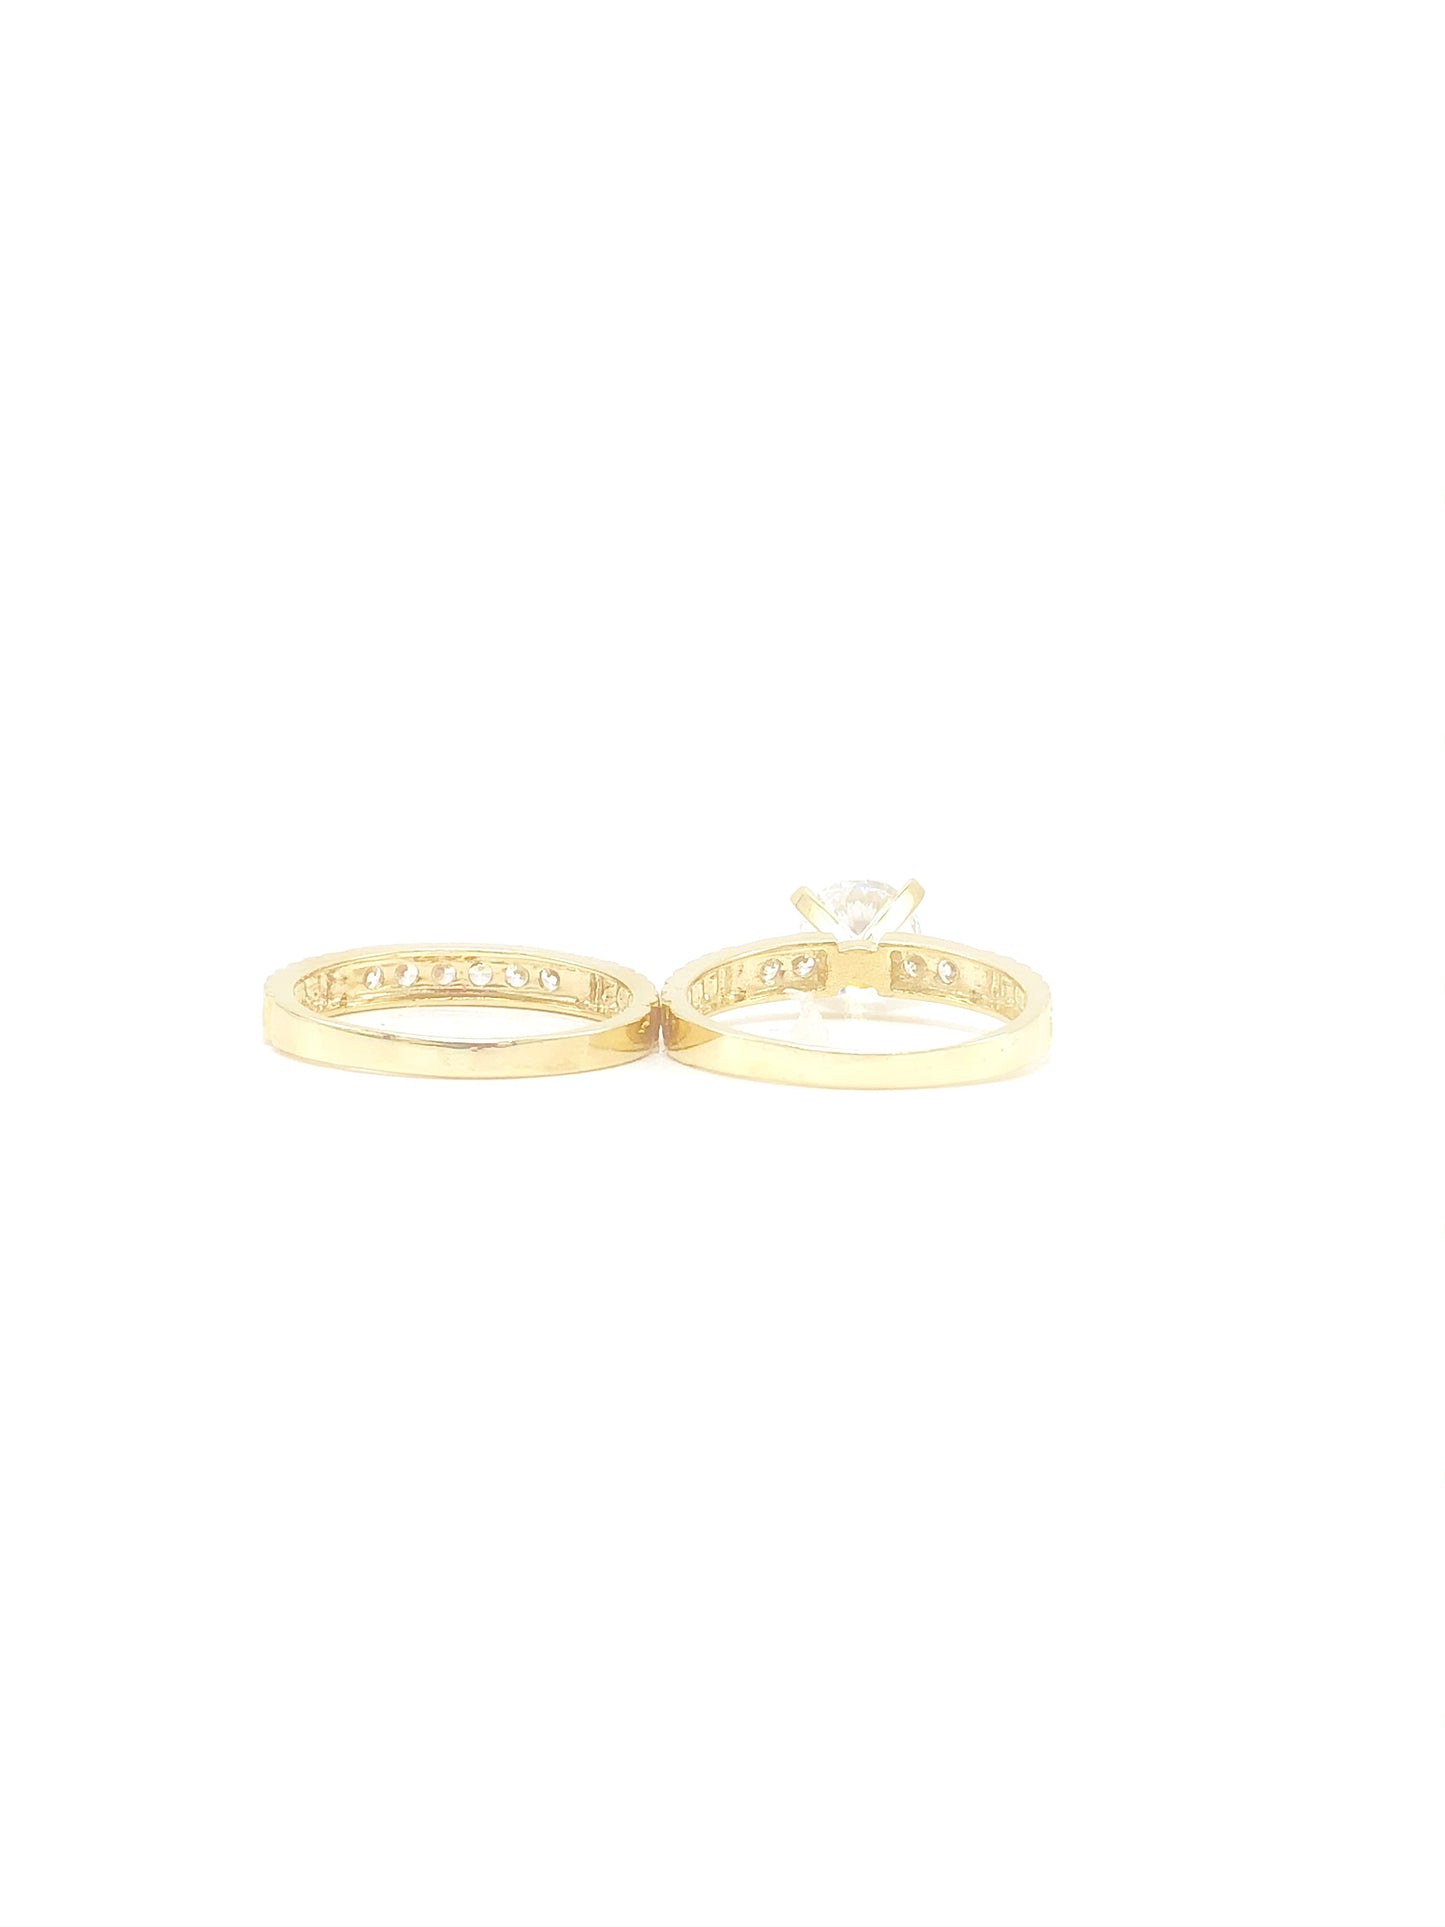 10K Yellow Gold Cubic Zirconia Ring Set